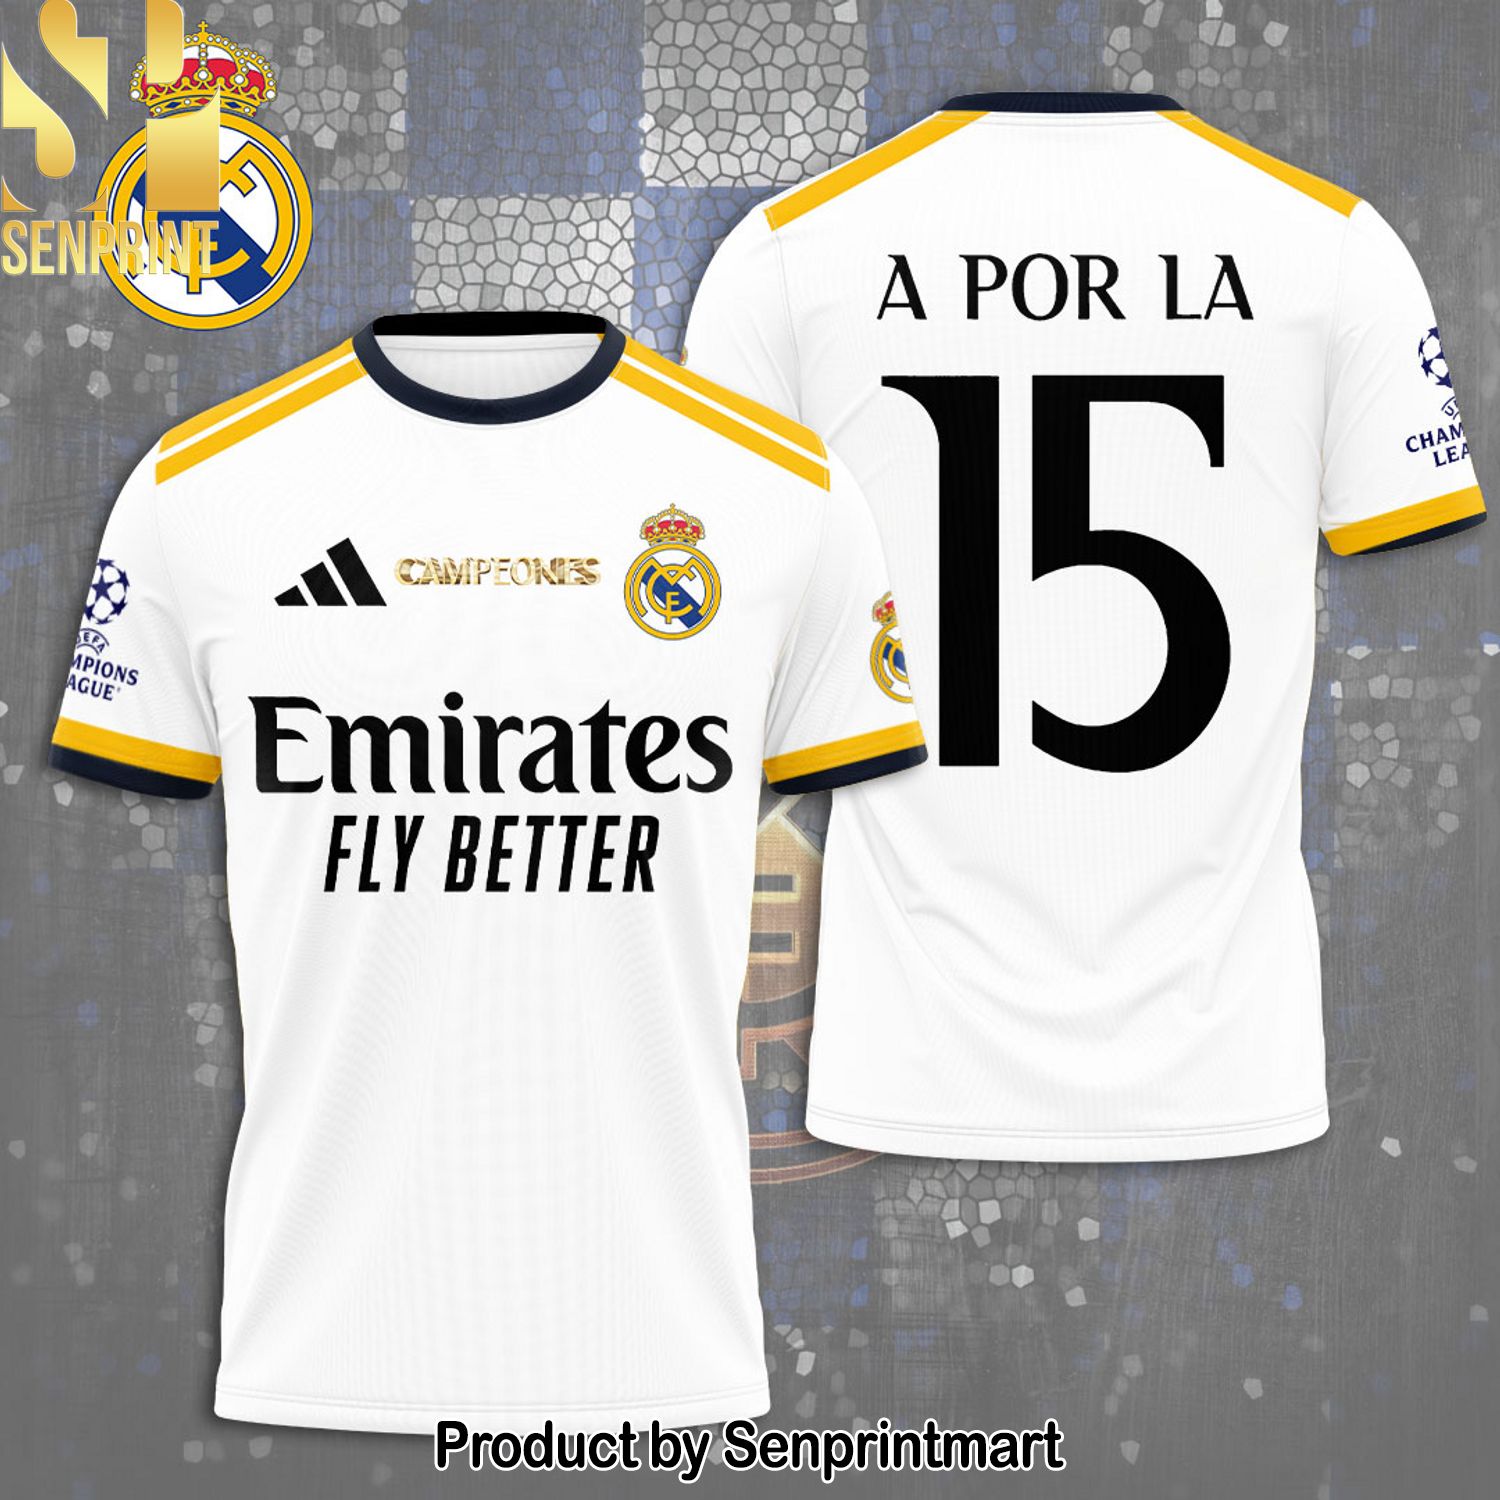 Real Madrid CF Full Printing Shirt – SEN0141